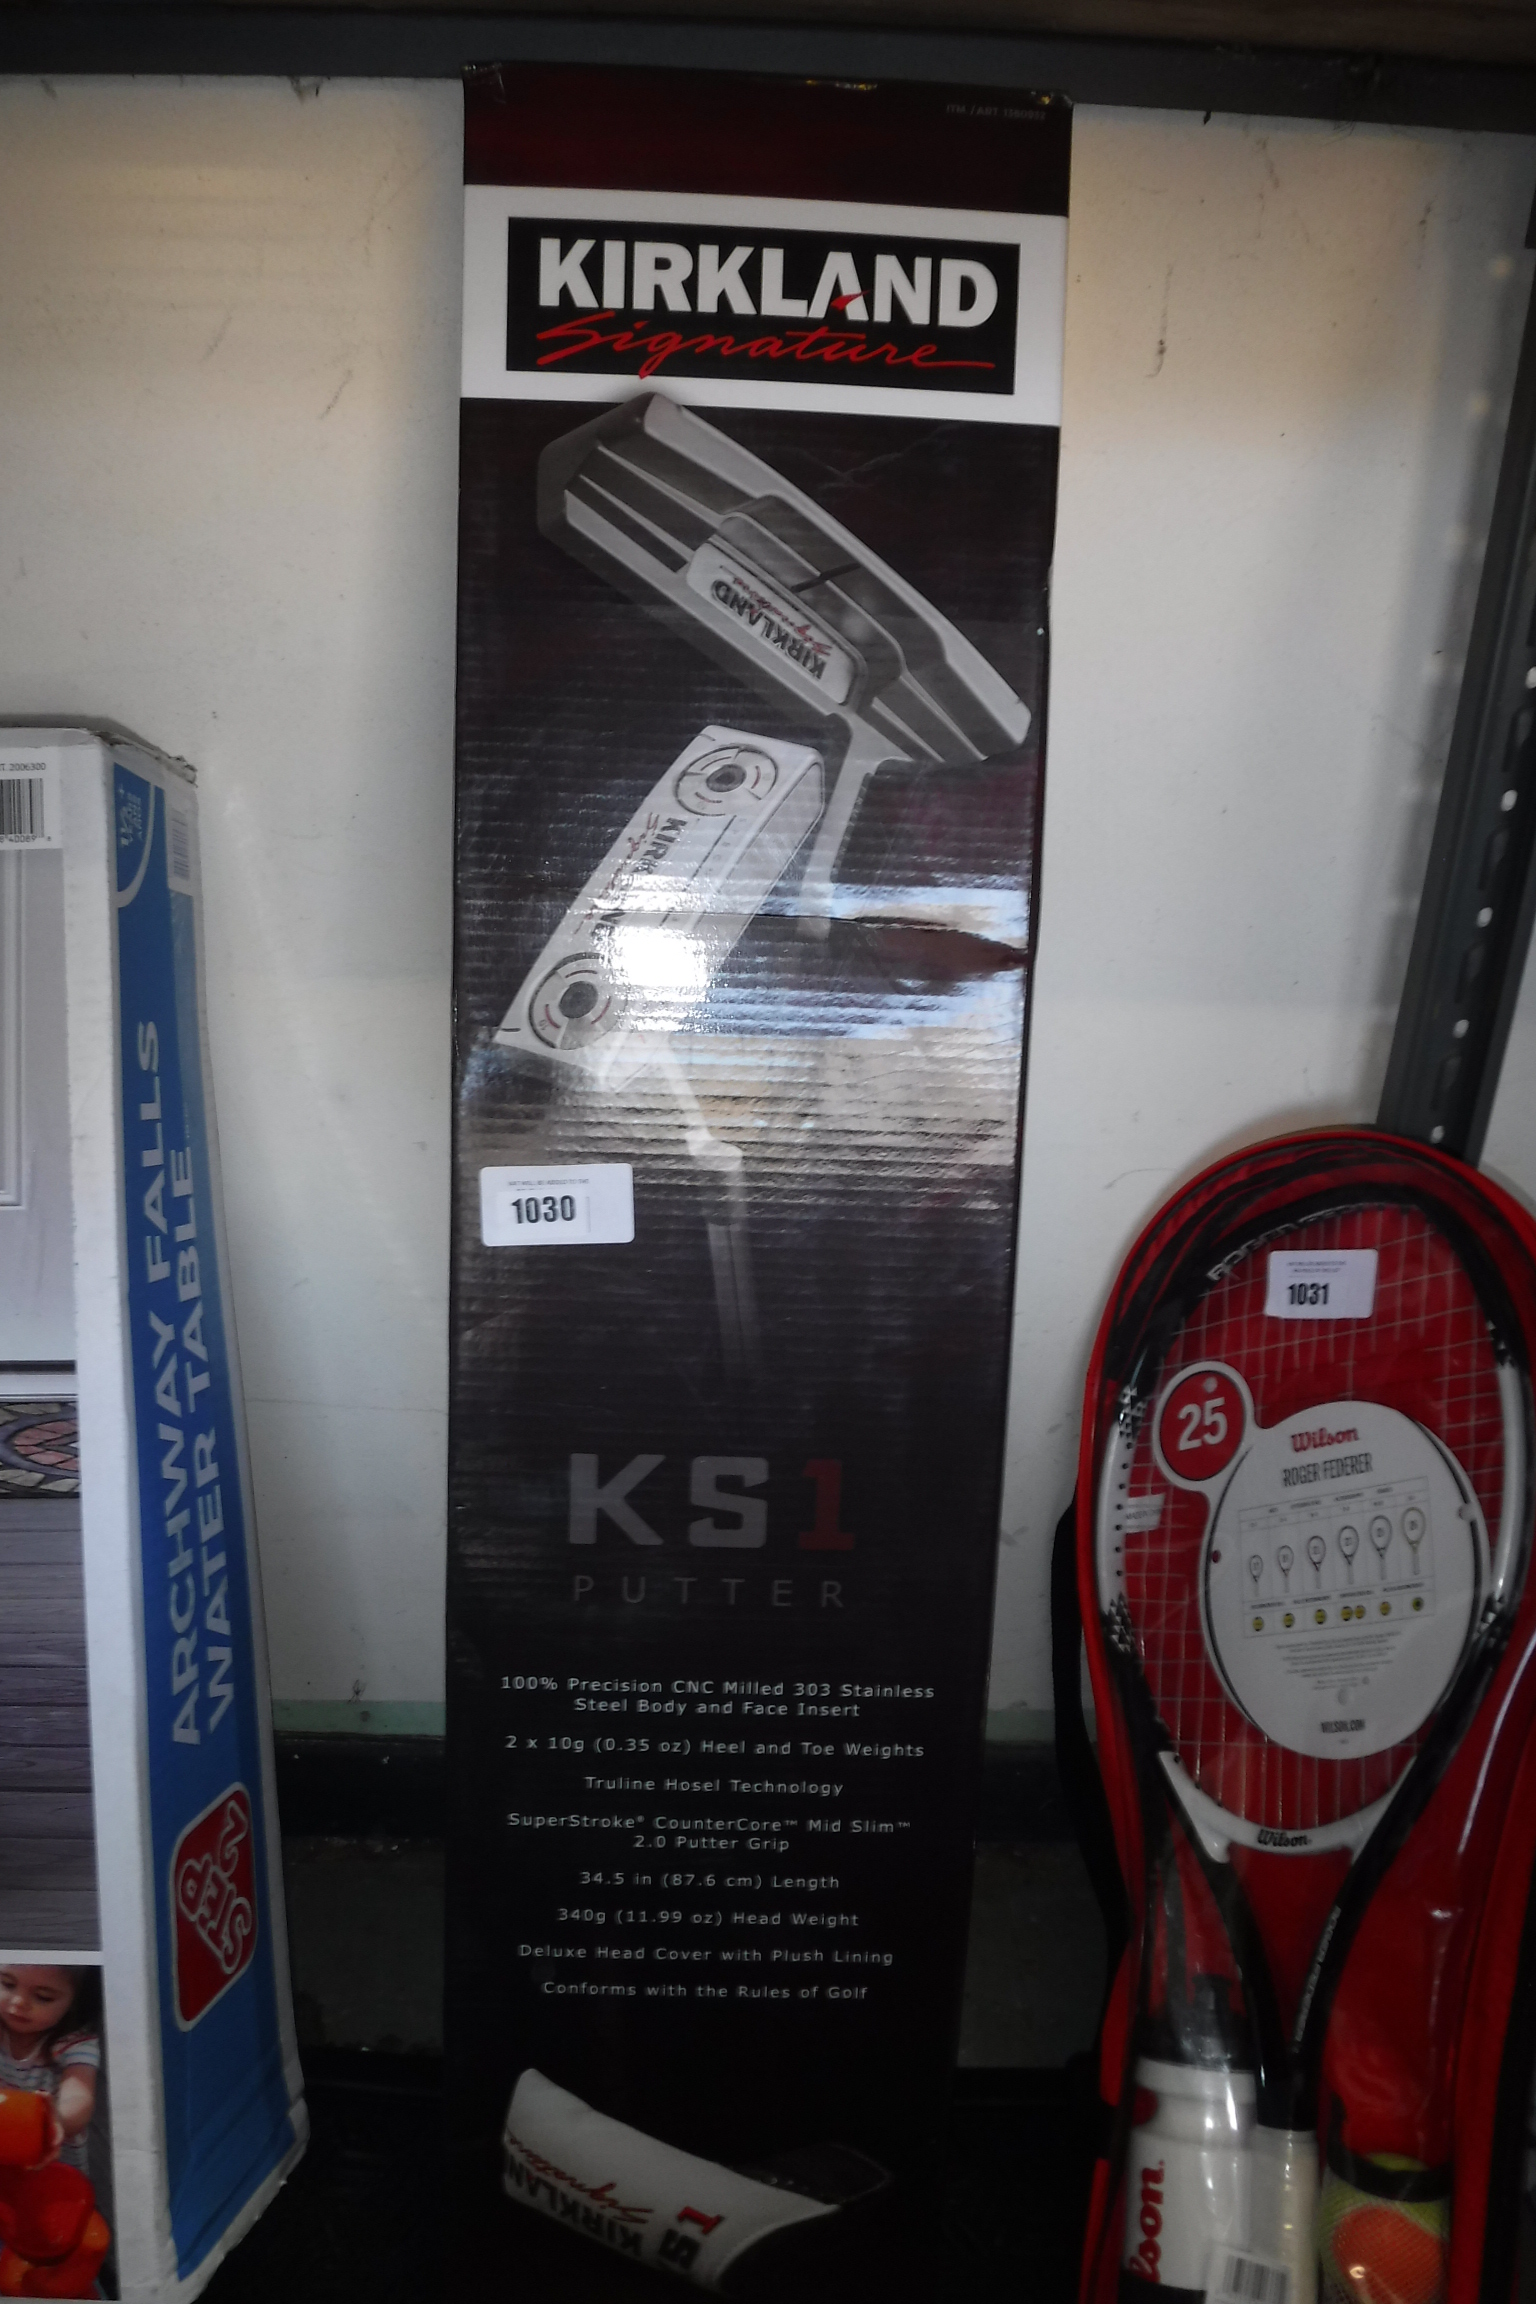 Boxed Kirkland Signature KS1 golf putter